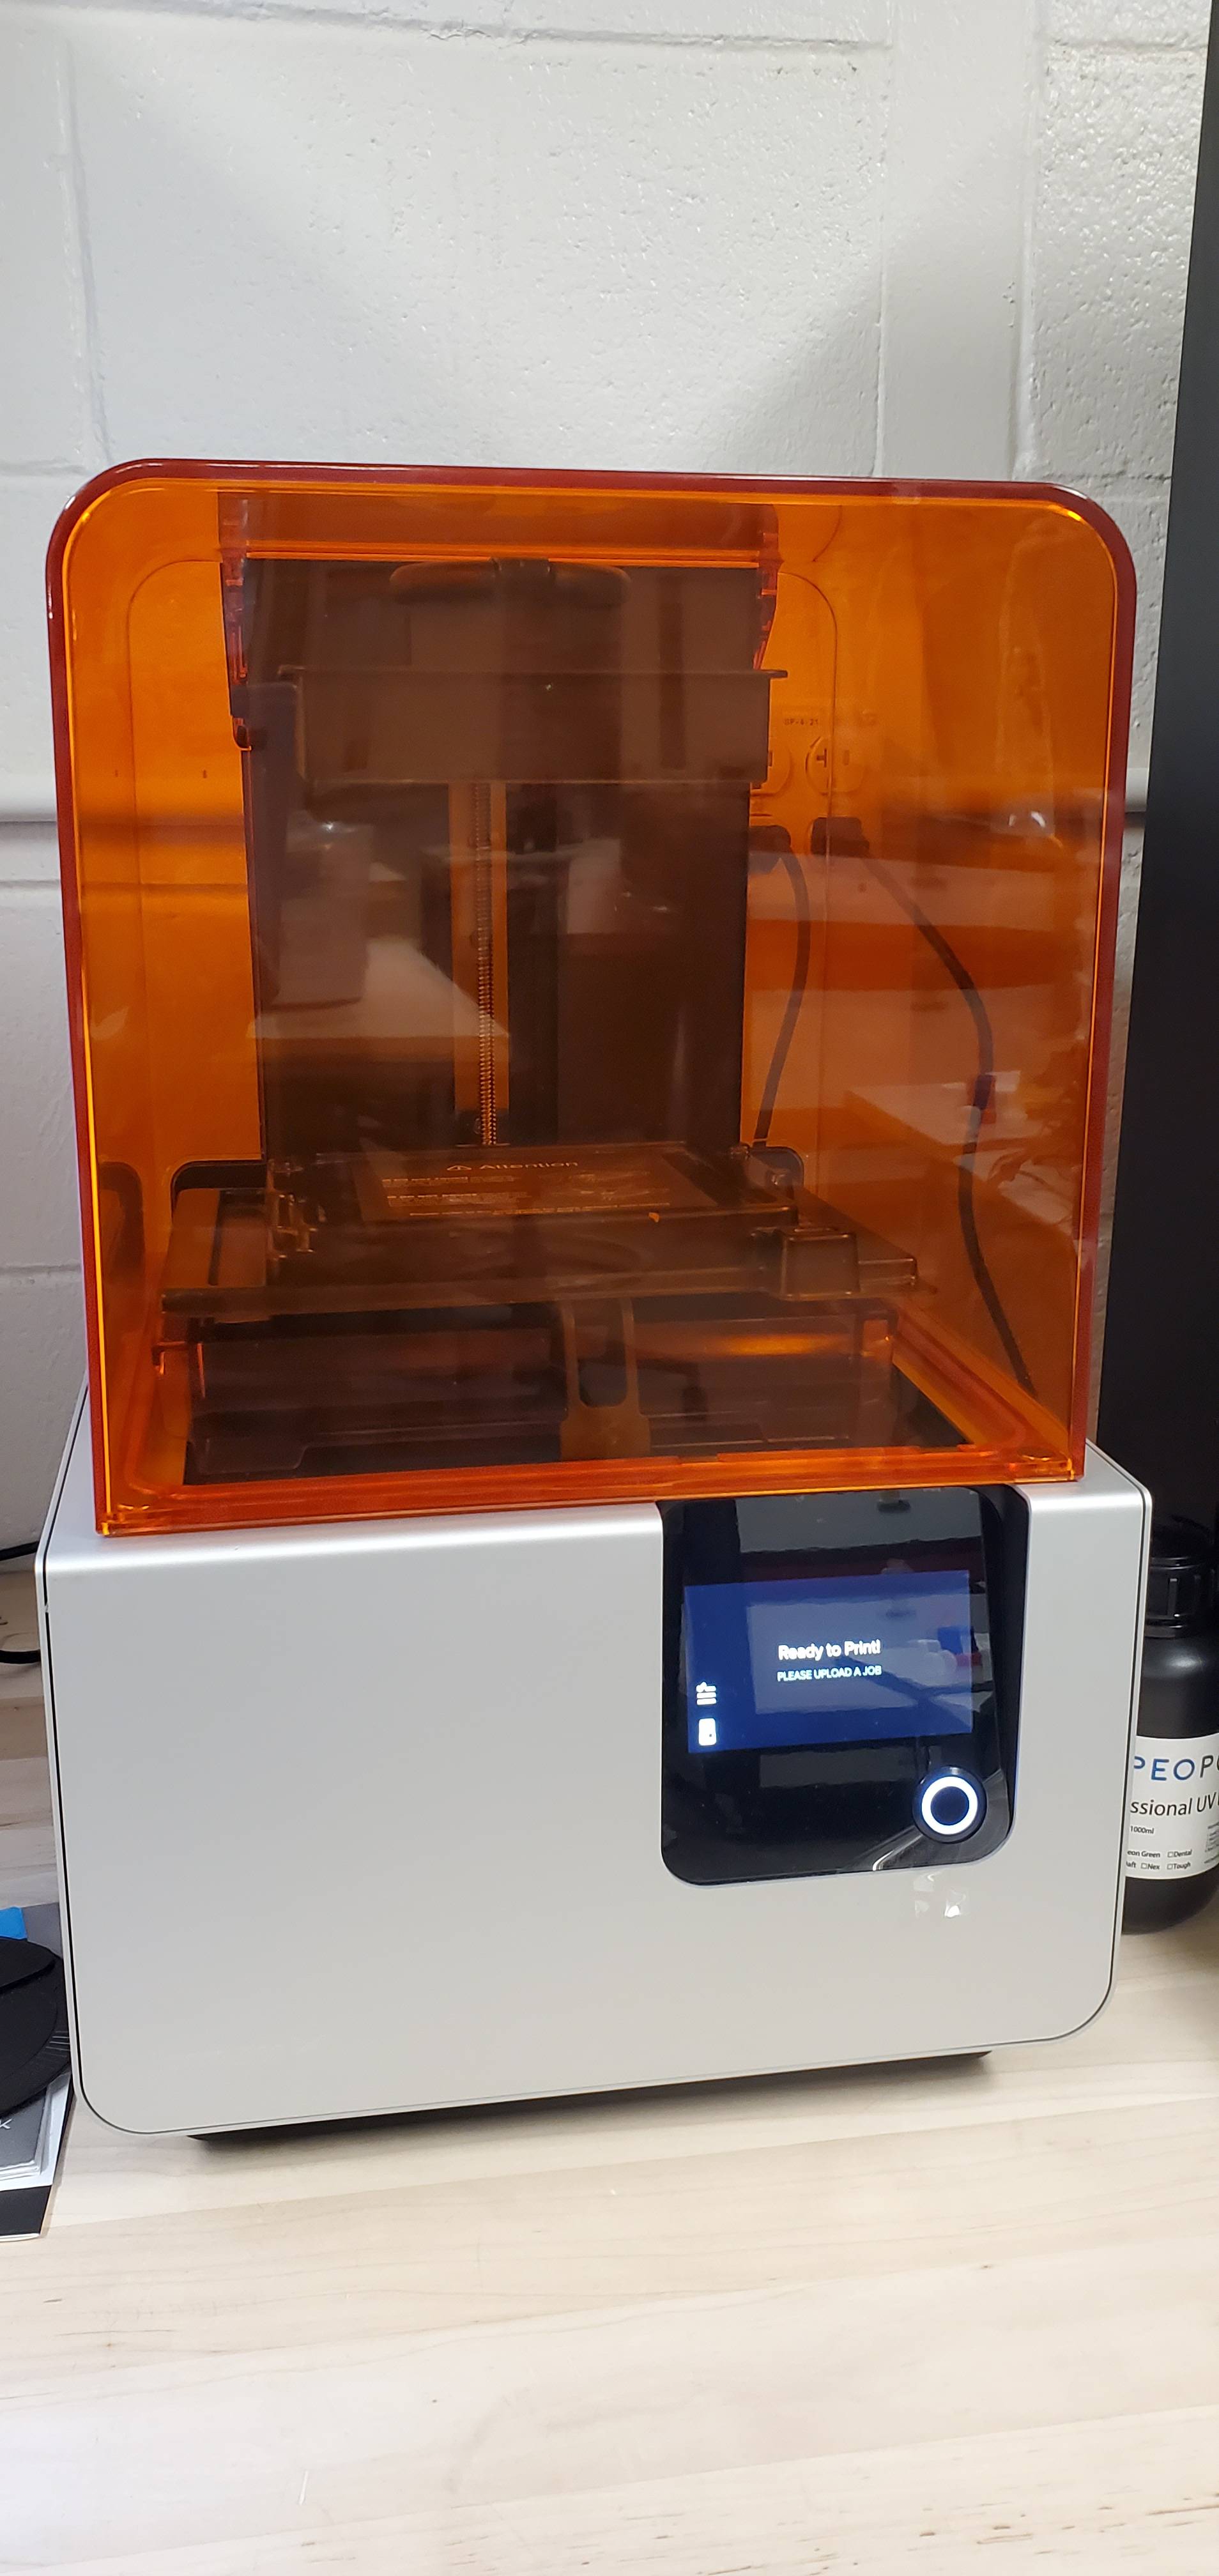 SLA Resin 3D printer in the rapid prototyping lab